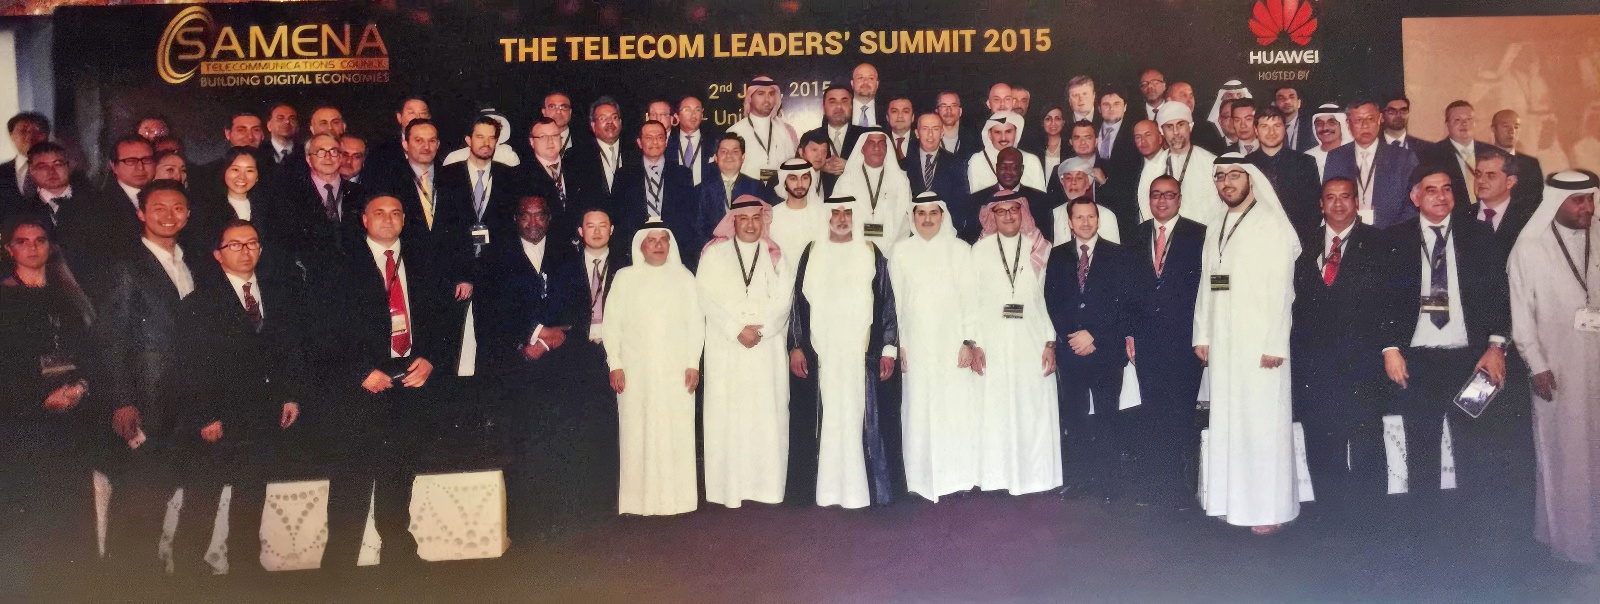 Speakers photo at the Samena Telecoms Leaders Summit